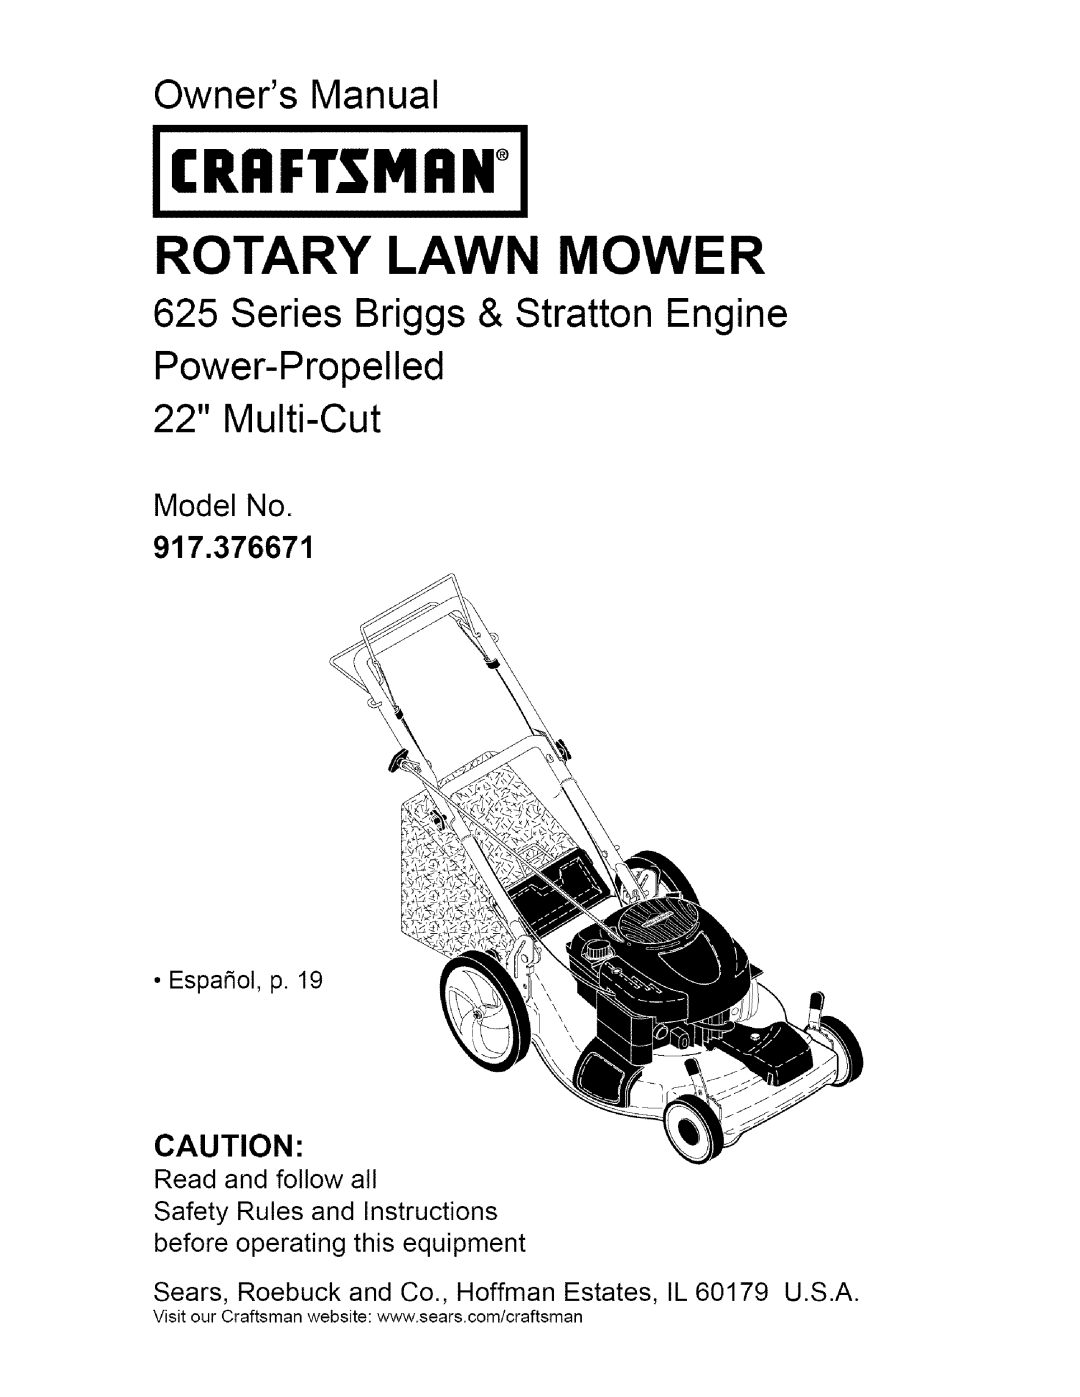 Craftsman 917.376671 owner manual Crrftsmiin, Rotary Lawn Mower, Series Briggs & Stratton Engine, Power-Propelled 